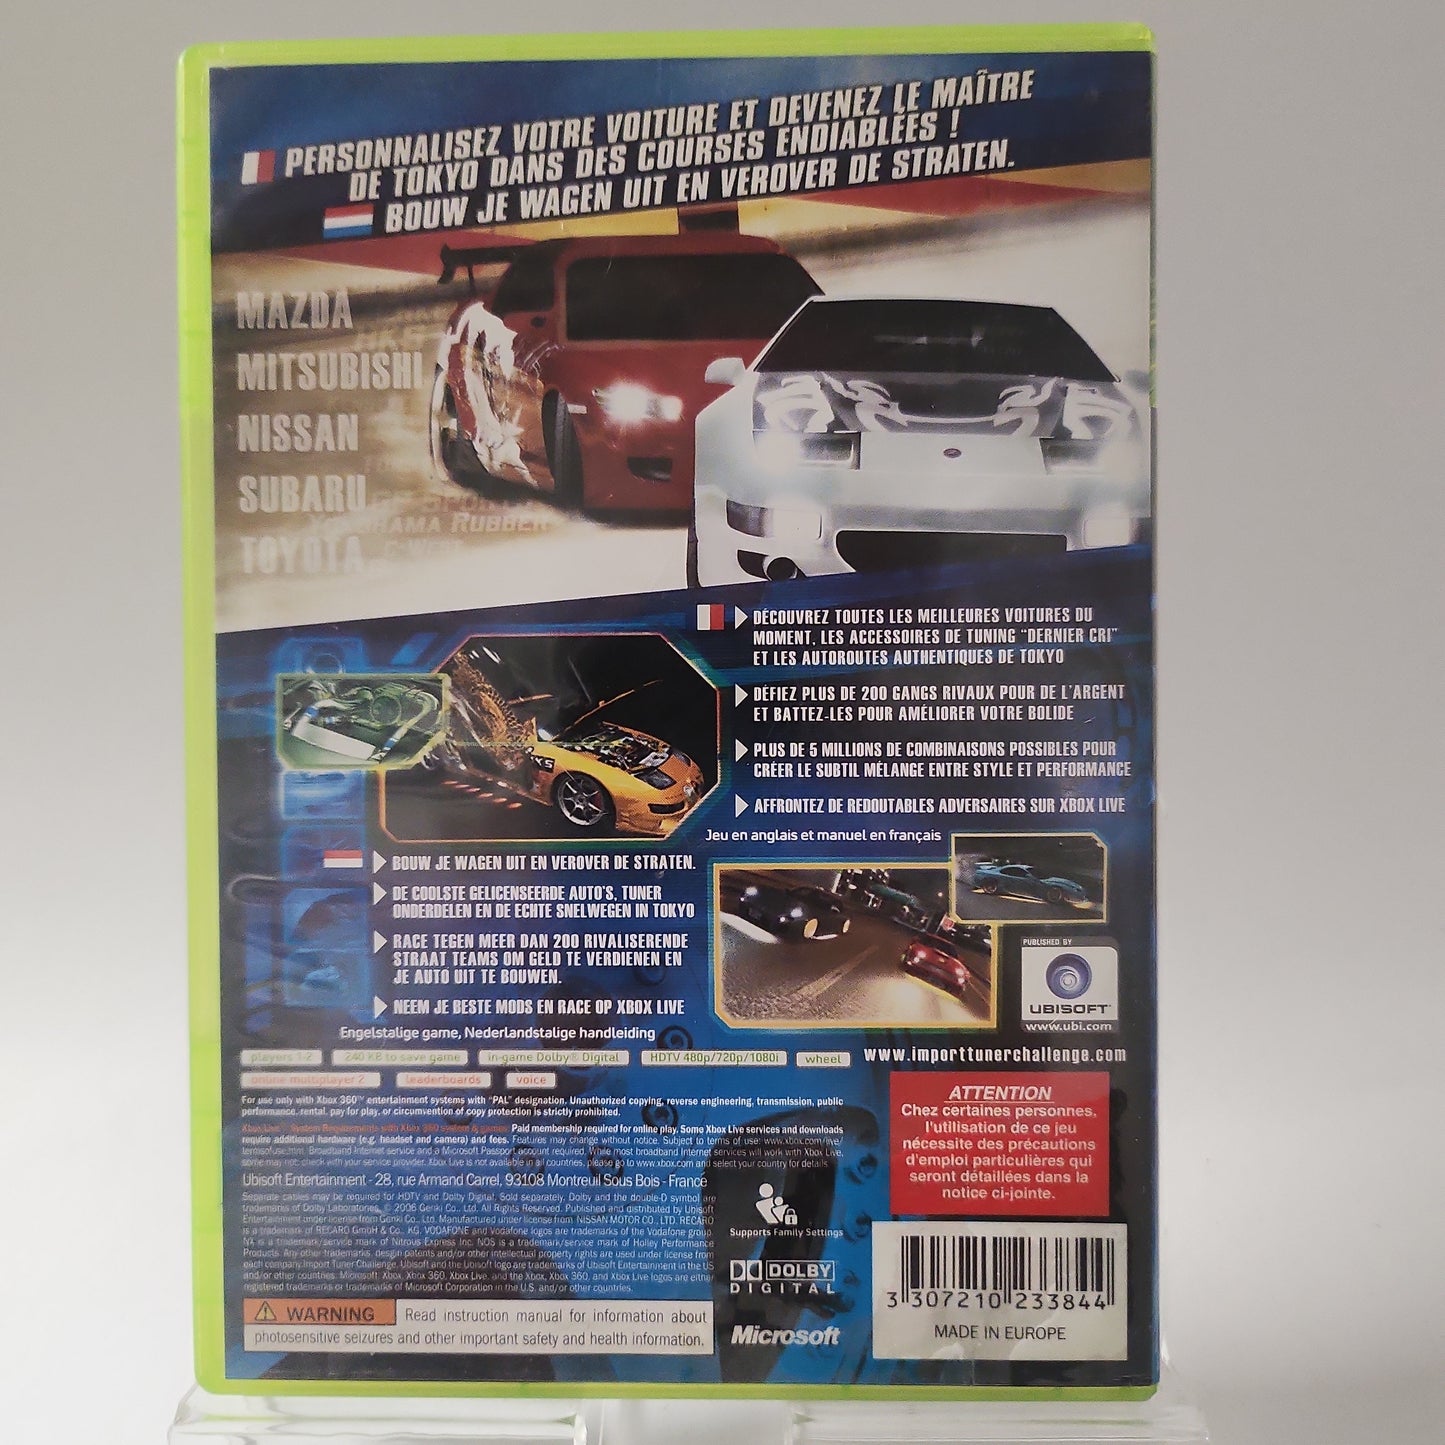 Import Tuner Challenge Xbox 360